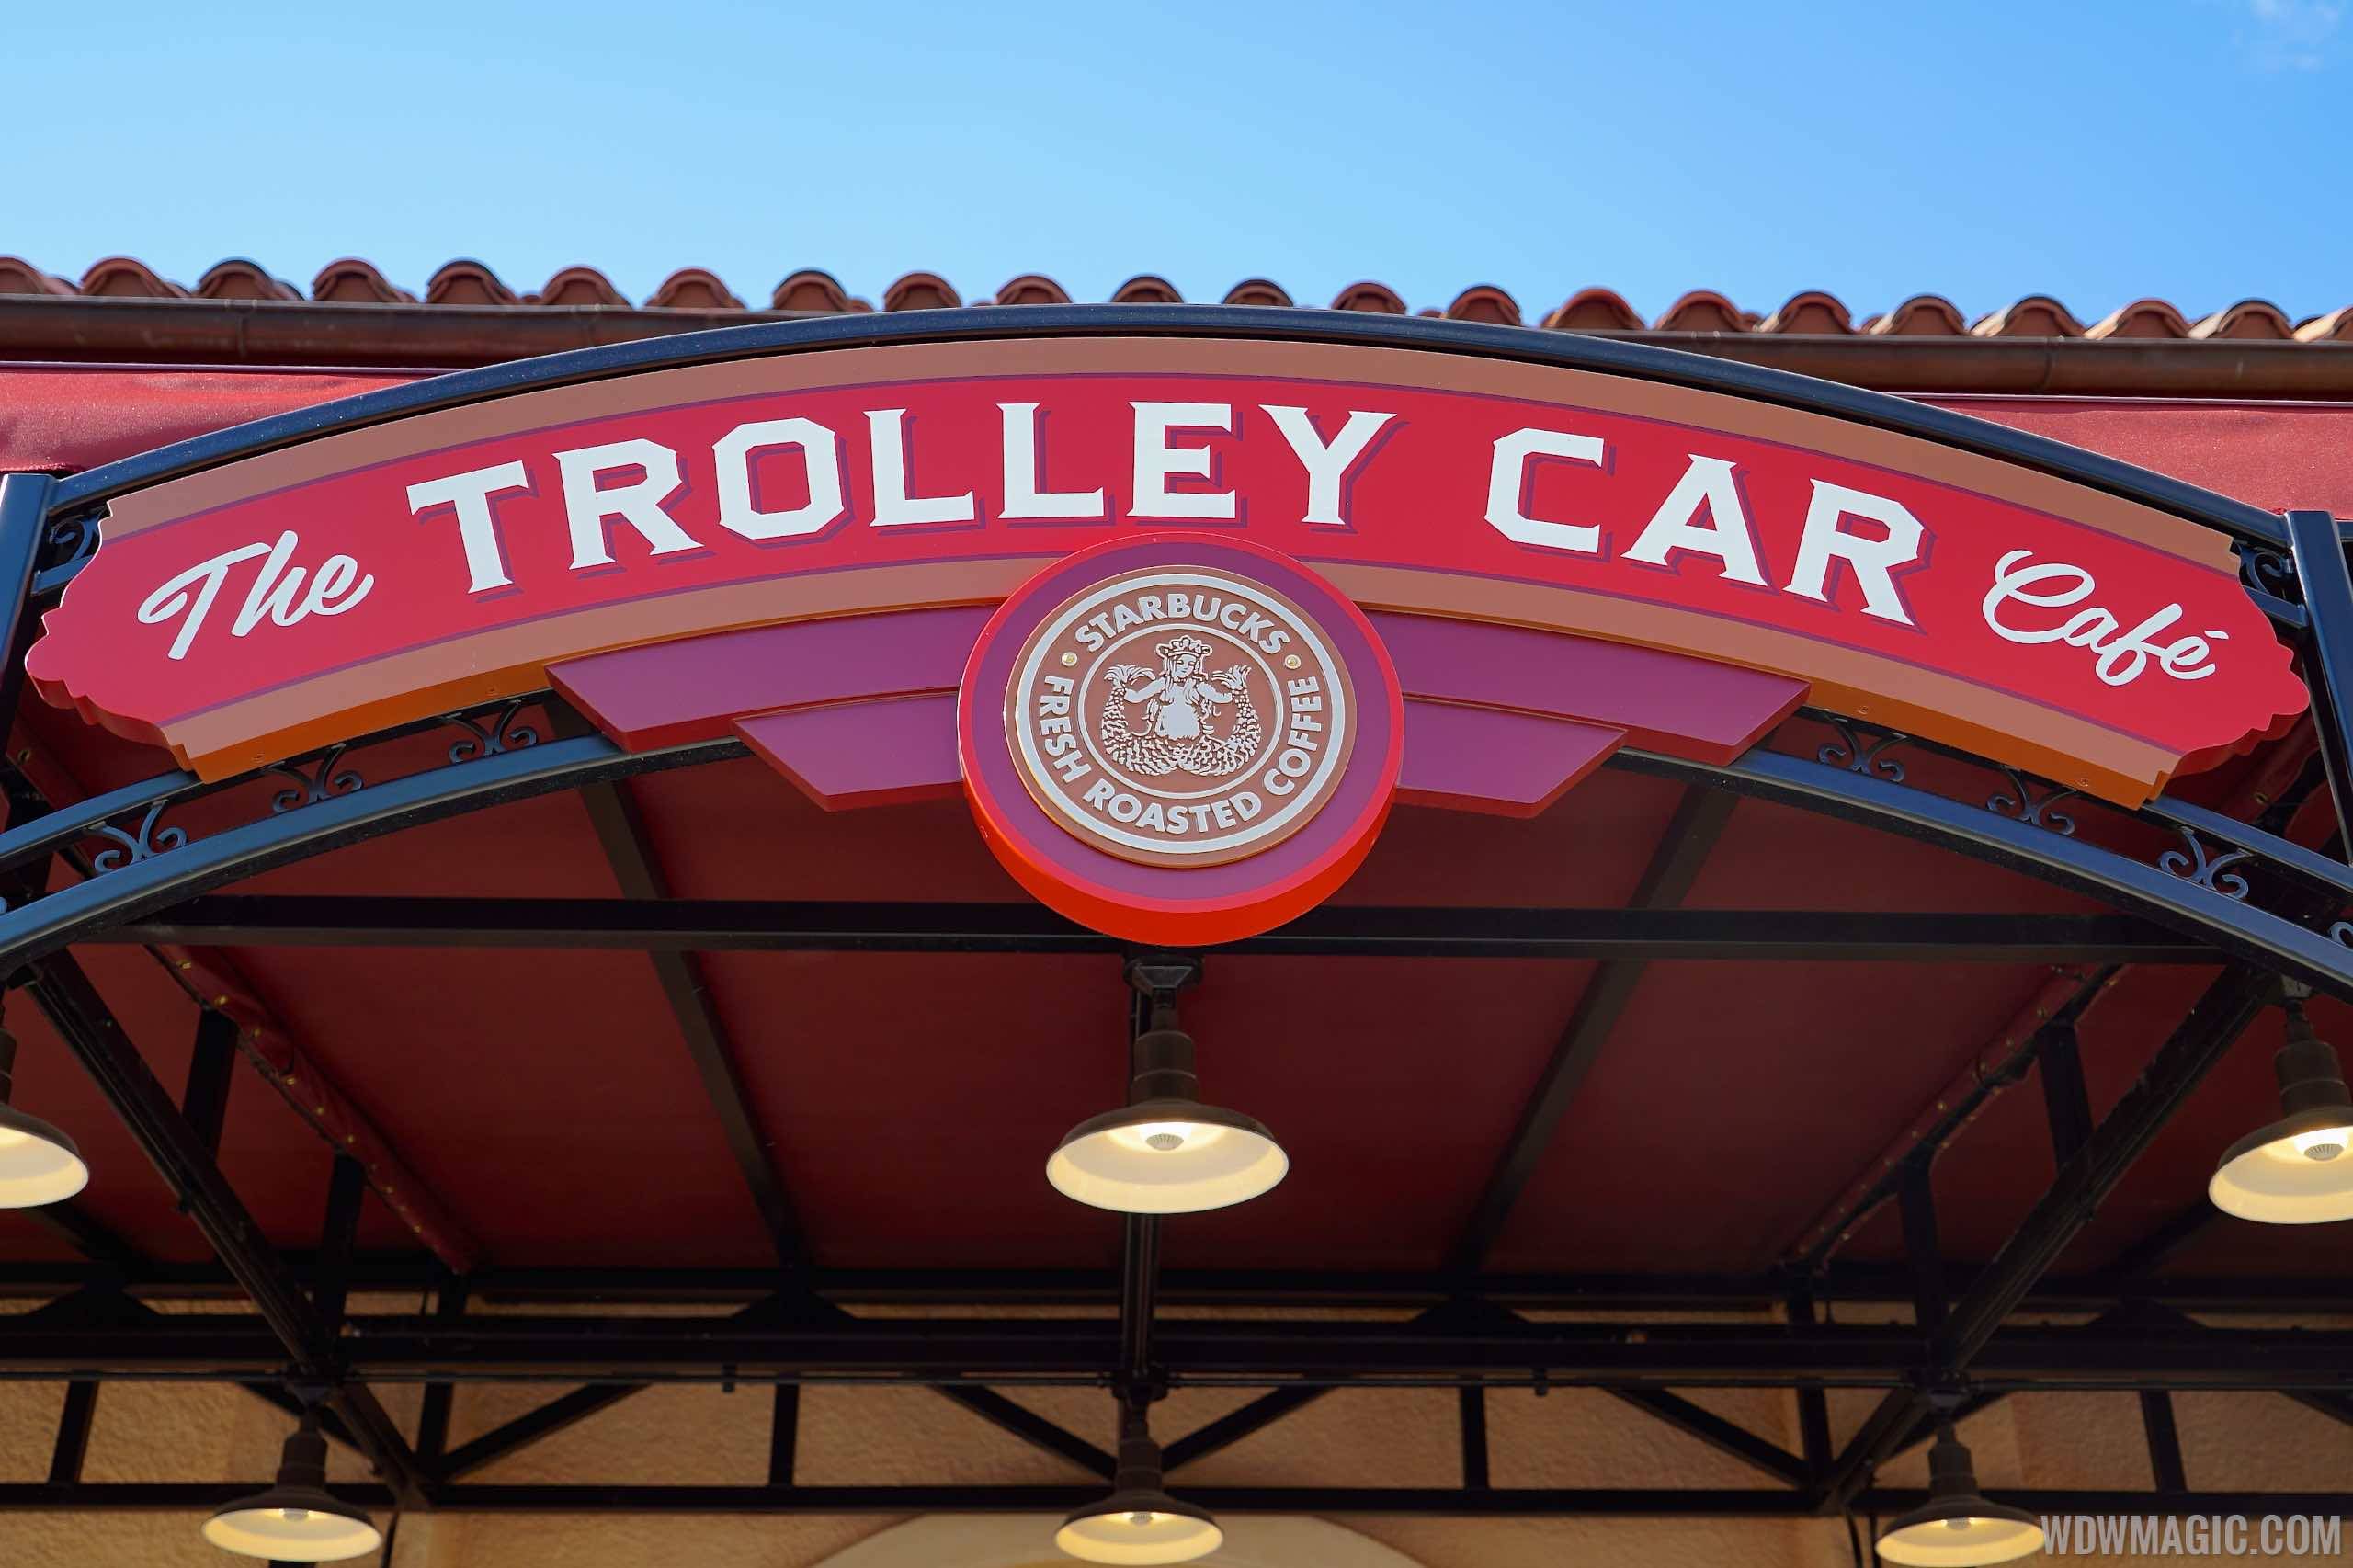 Trolley Car Cafe - Main entrance sign